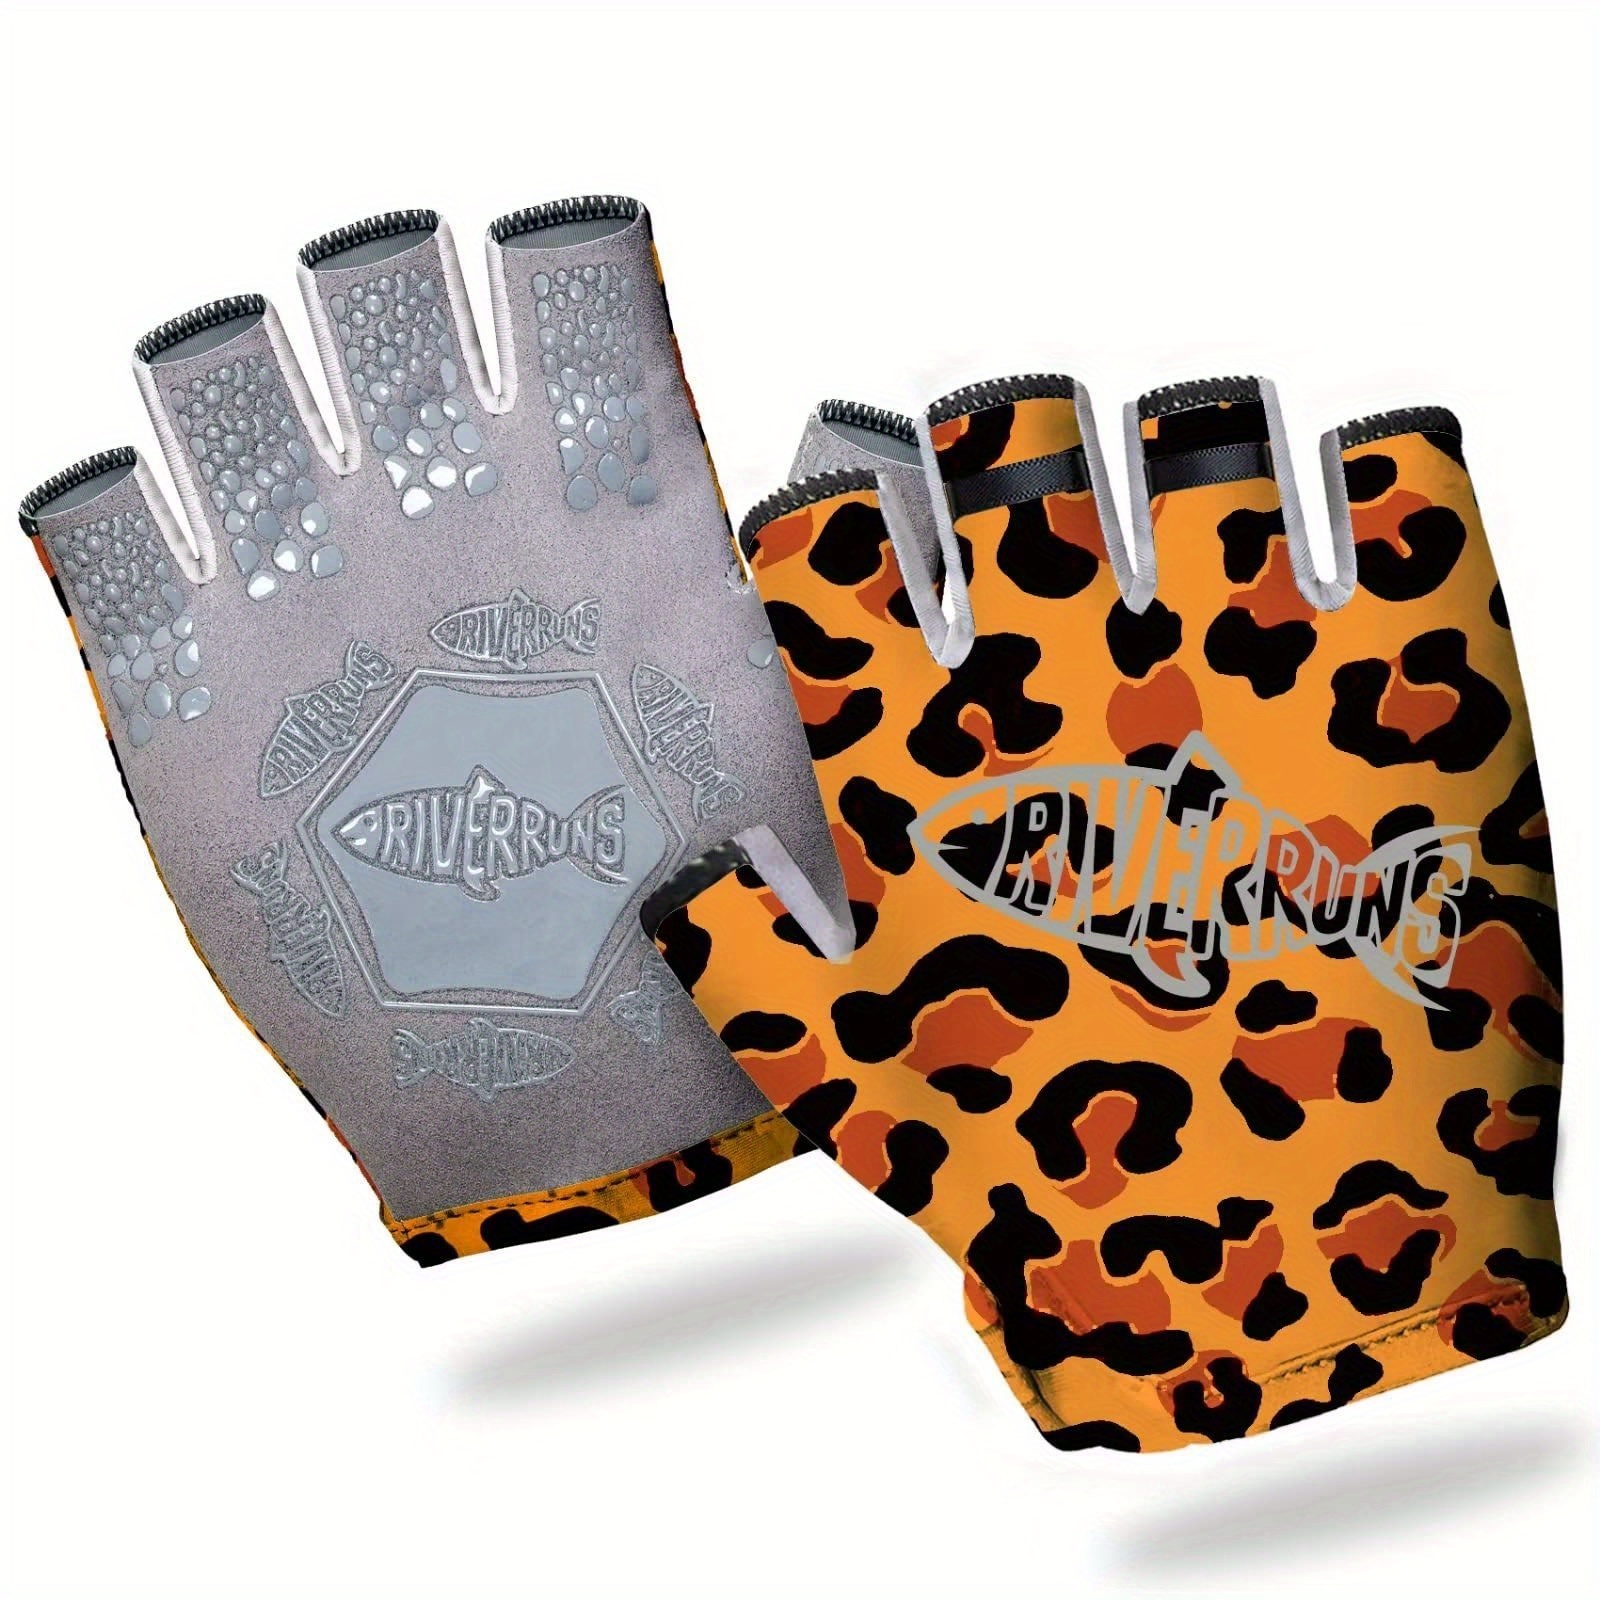 Riverruns UPF 50+ Fingerless Fishing Gloves- Fishing Sun Gloves- UV  Protection Gloves Men and Women Fishing, Boating, Kayaking, Hiking,  Running, Cycling and Driving.